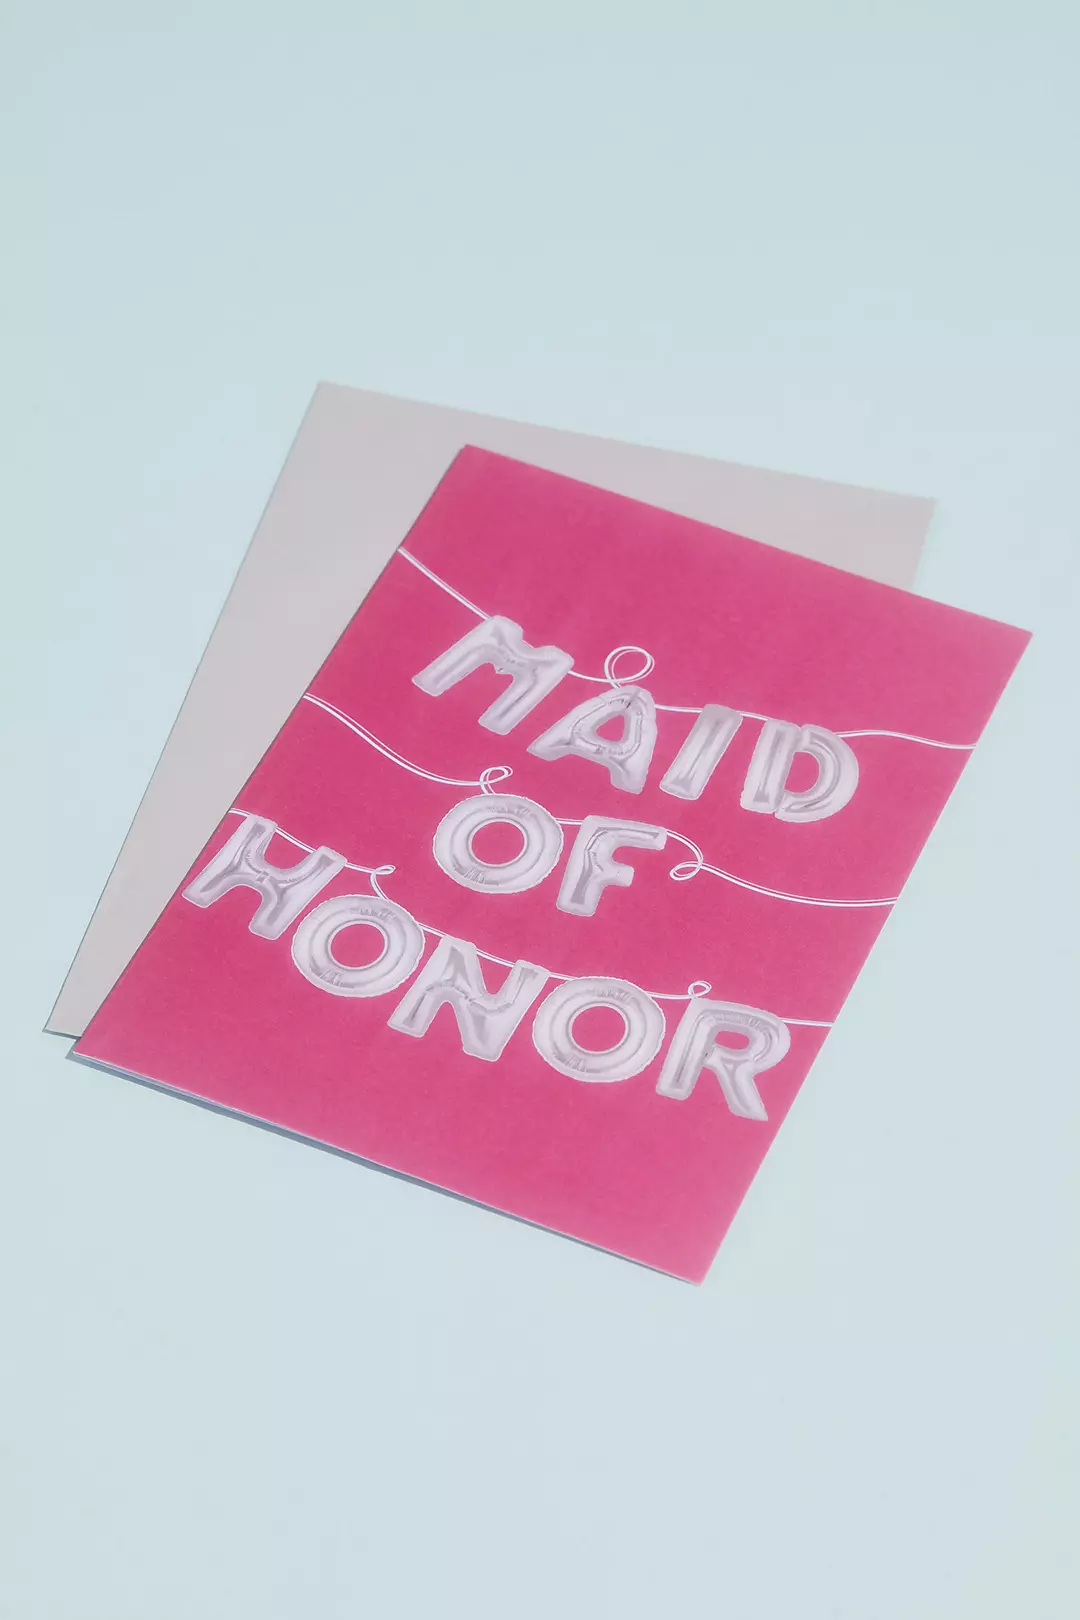 Maid of Honor Balloons Greeting Card Image